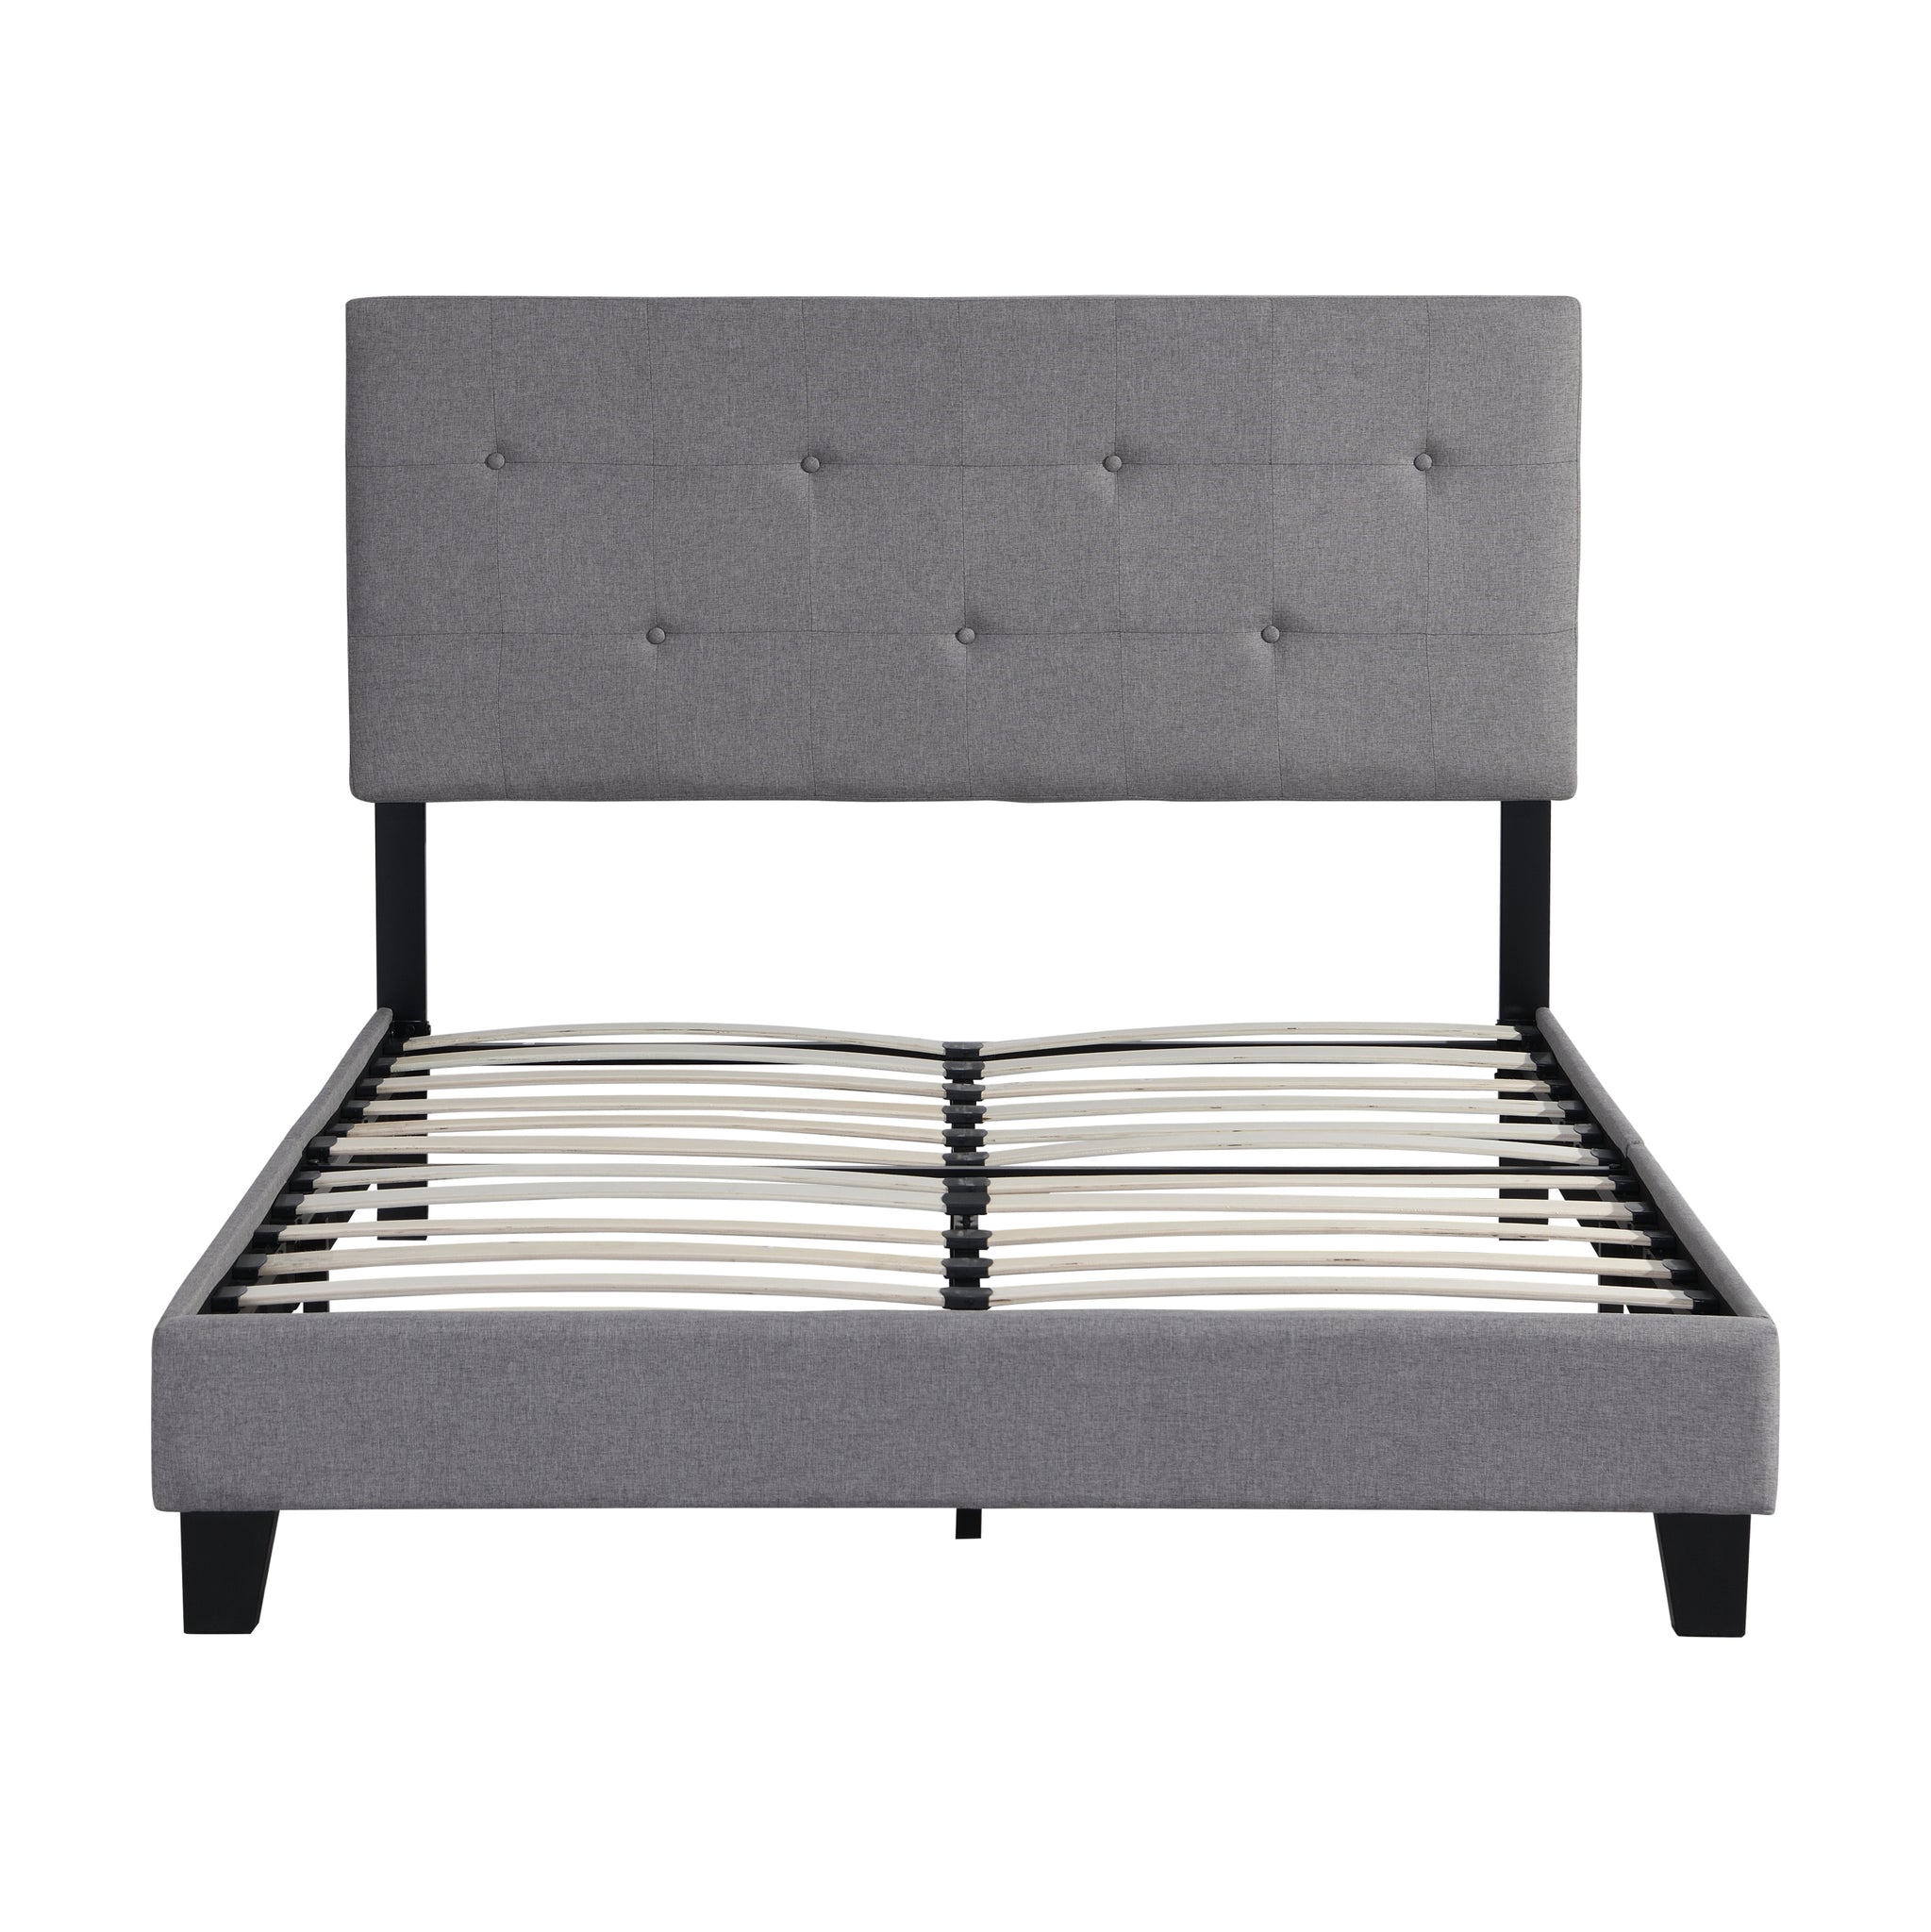 Full Size Upholstered Platform Bed Frame with Modern gray-linen